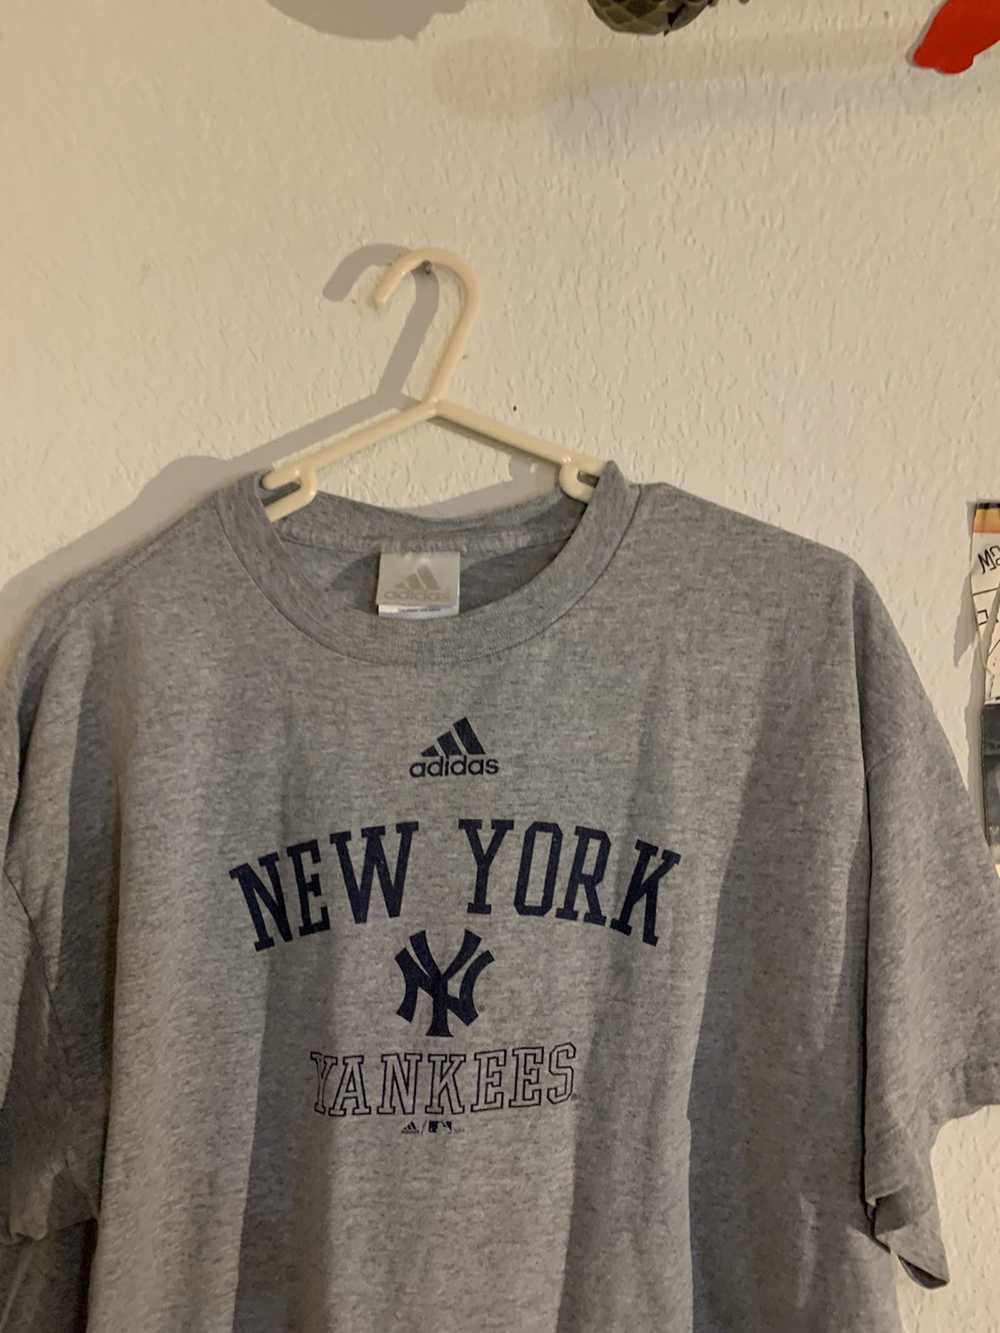 New York Yankees × Vintage × Yankees Yankees Shirt - image 2